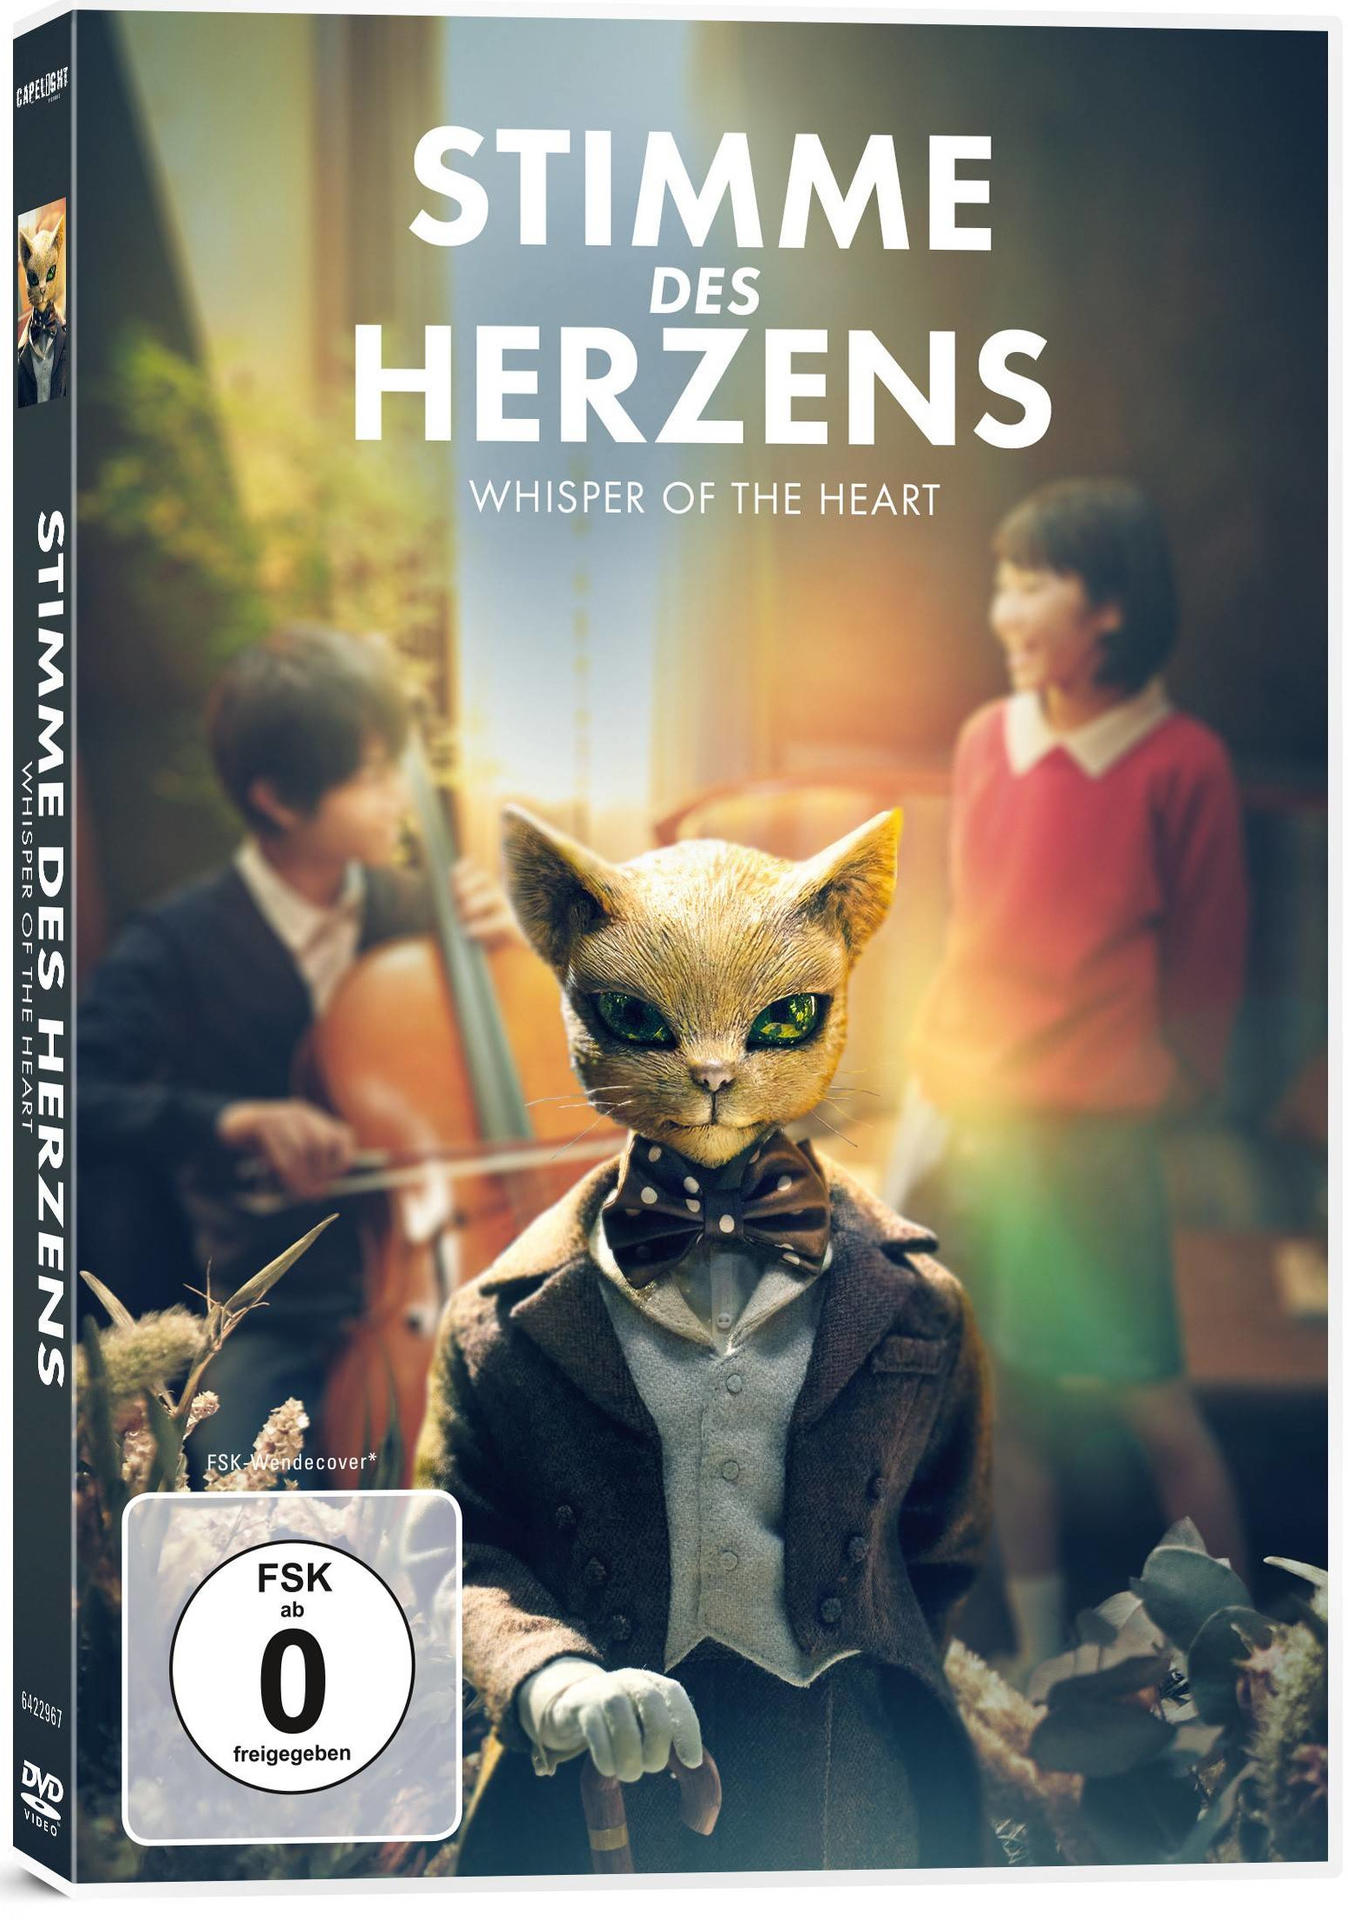 Heart Whisper Stimme des DVD the of Herzens -